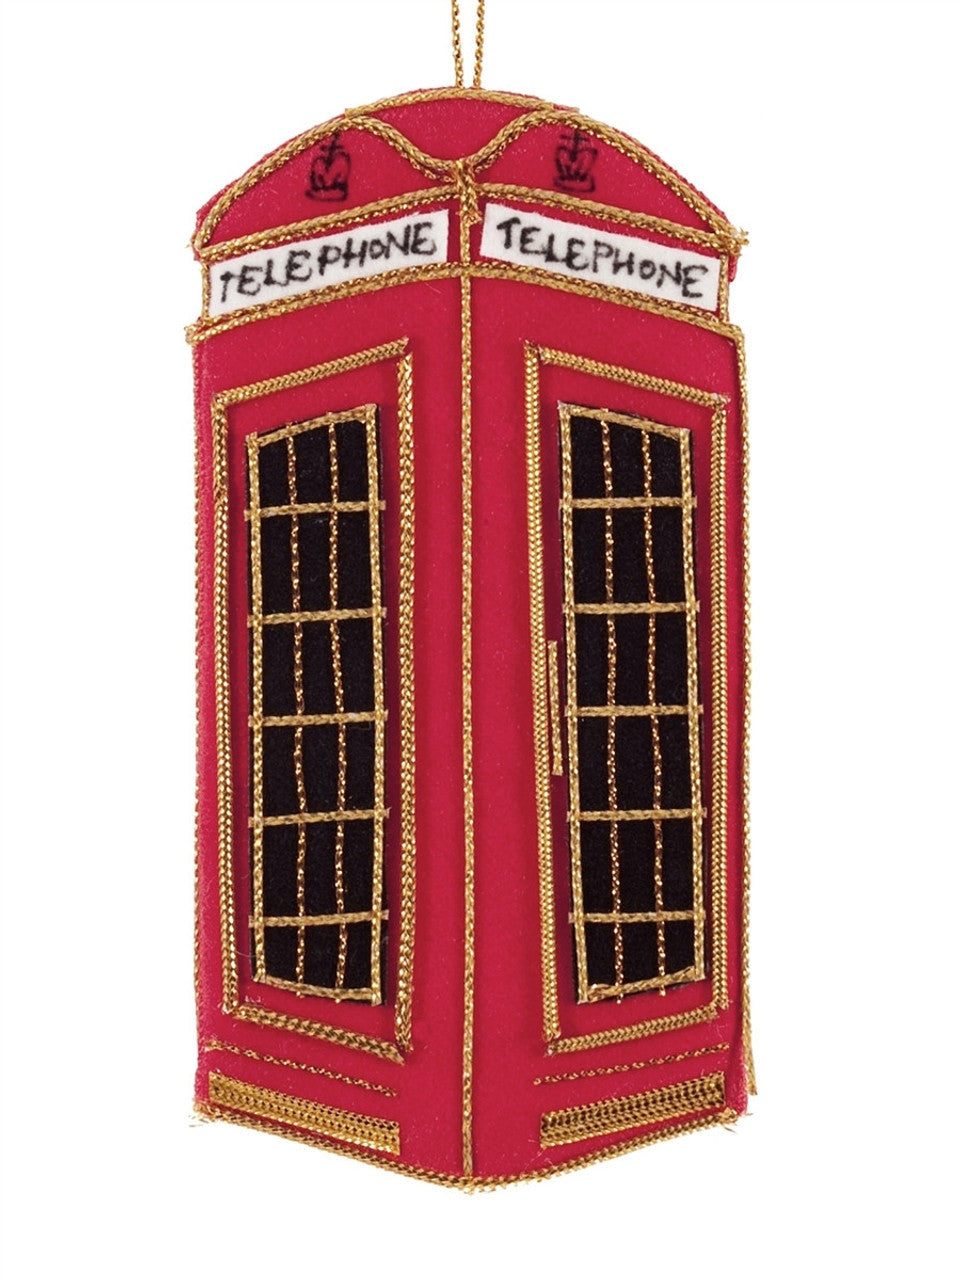 Telephone Box Decoration by St. Nicolas.